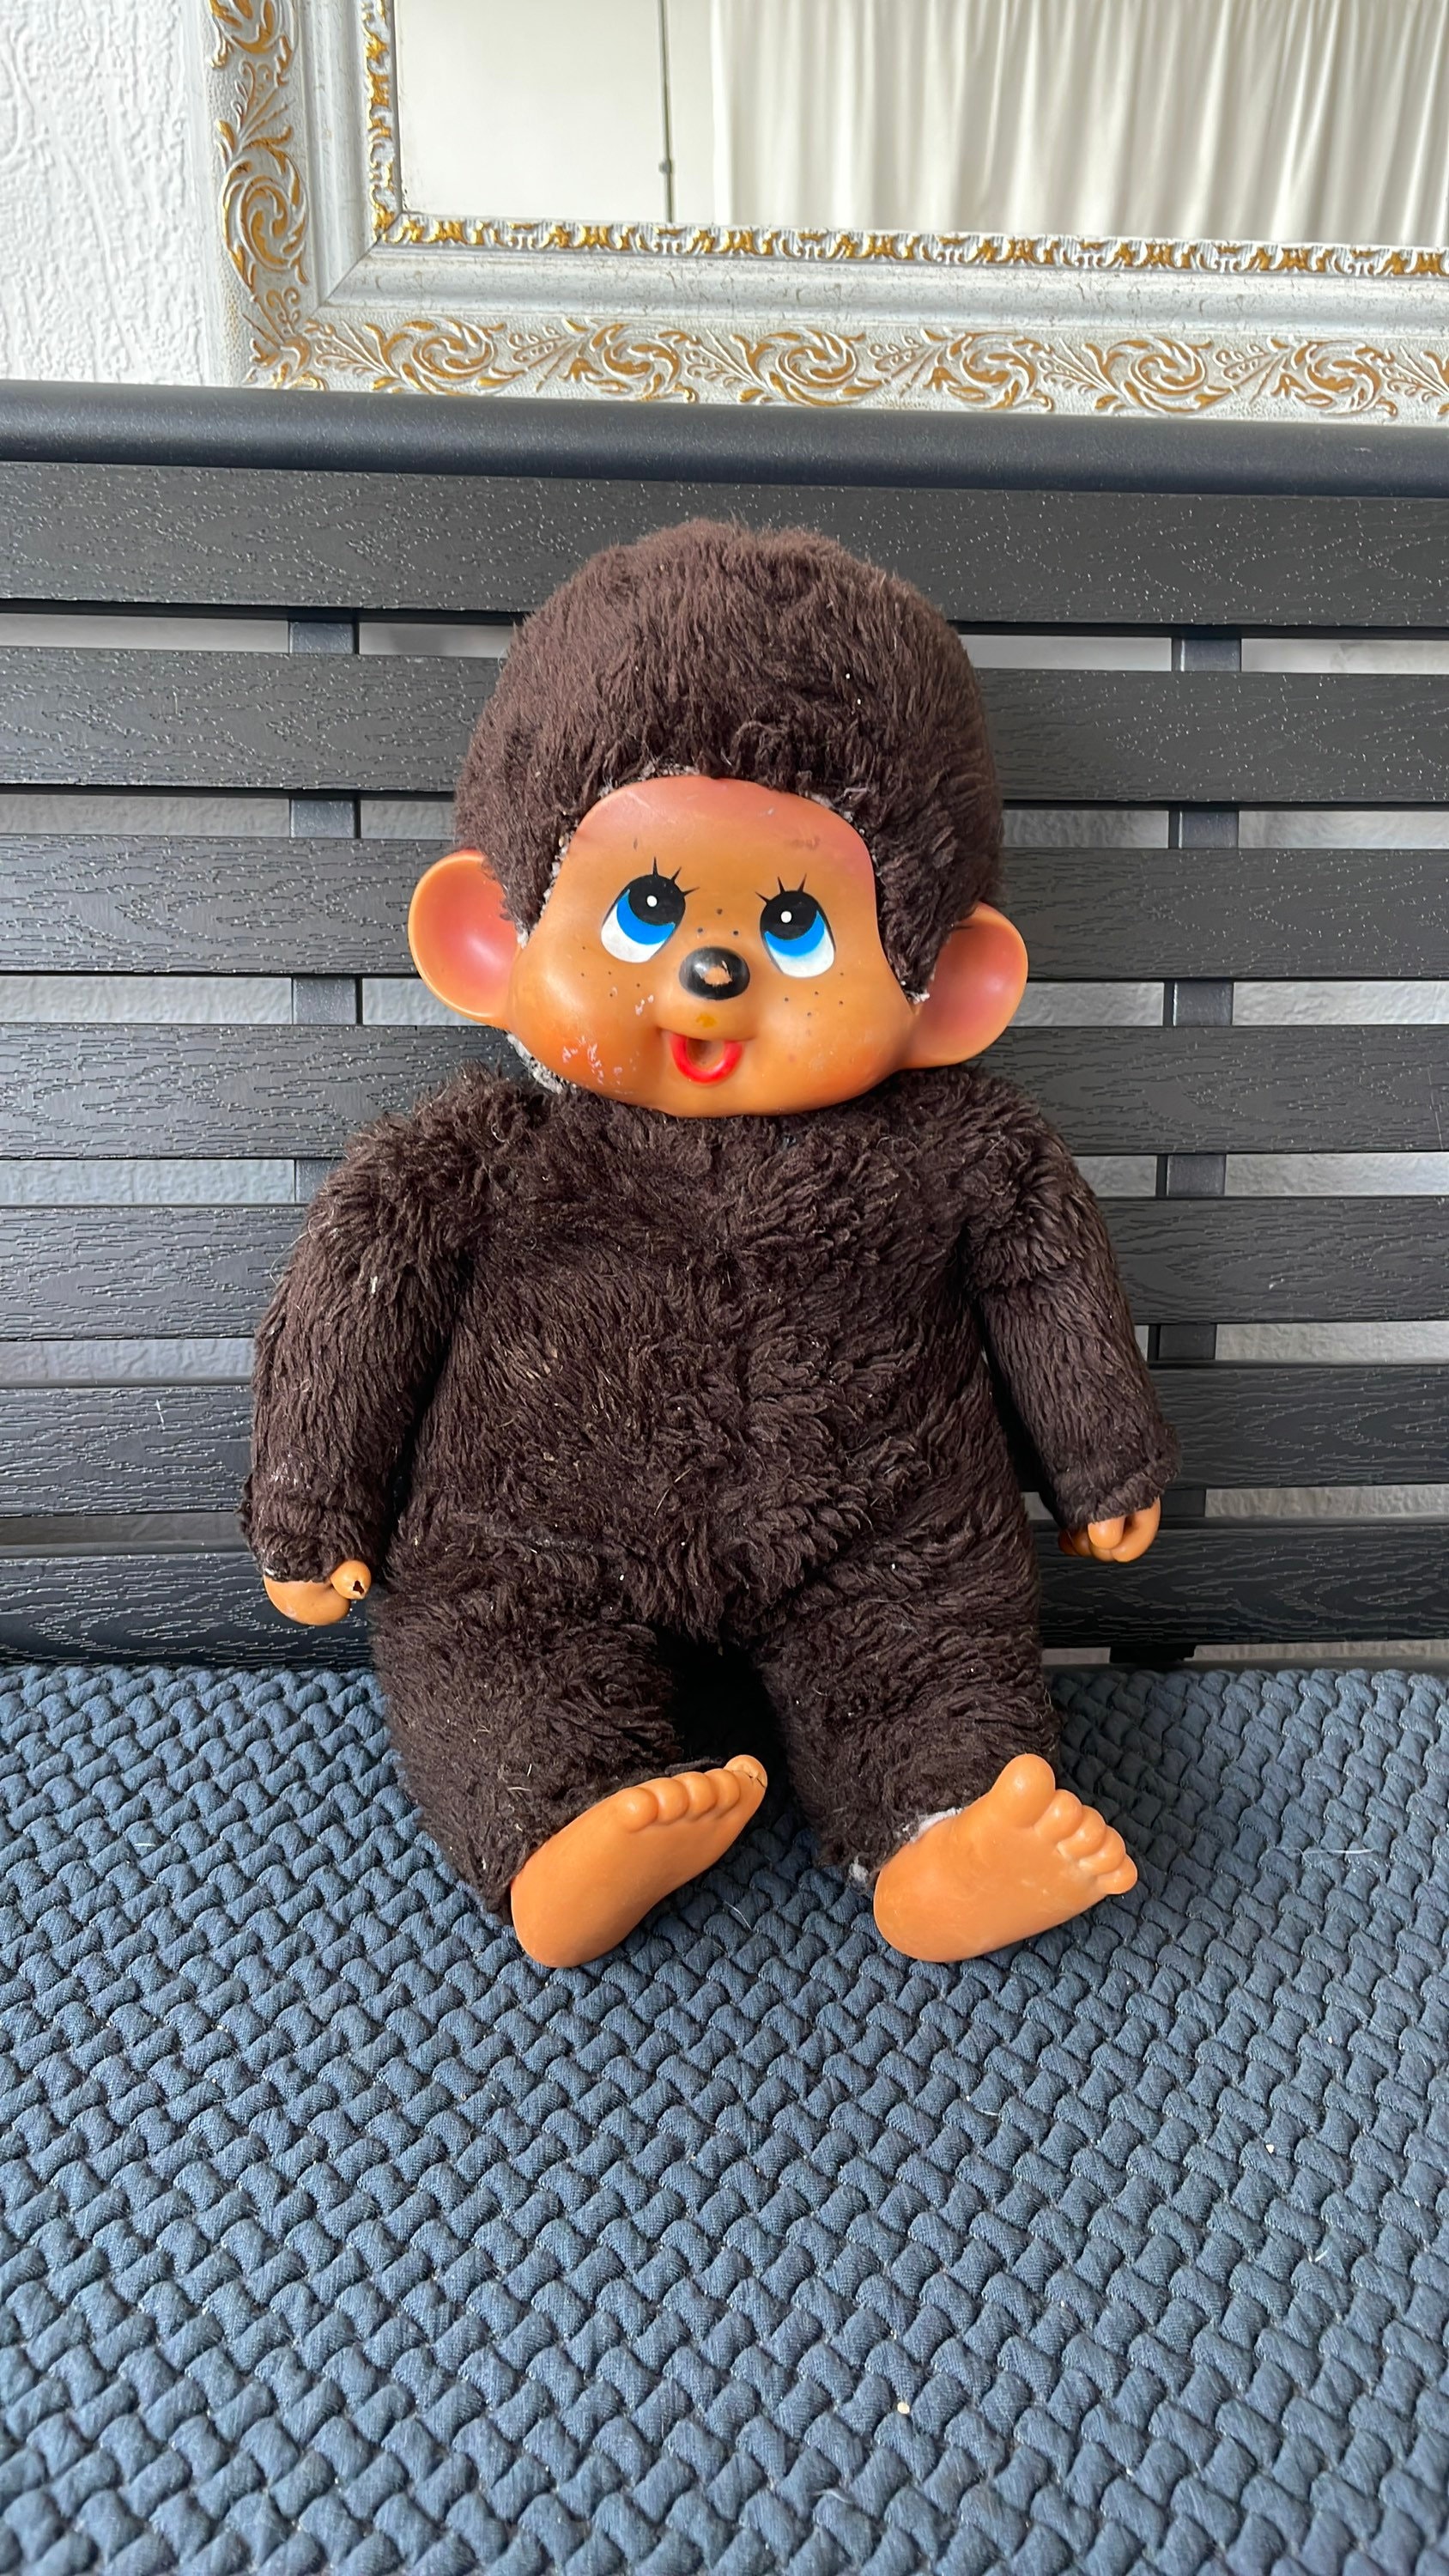 Baby Monchhichi Stitch Stuffed Animal Plush 8 inch Cute Toy Doll Kid Gifts